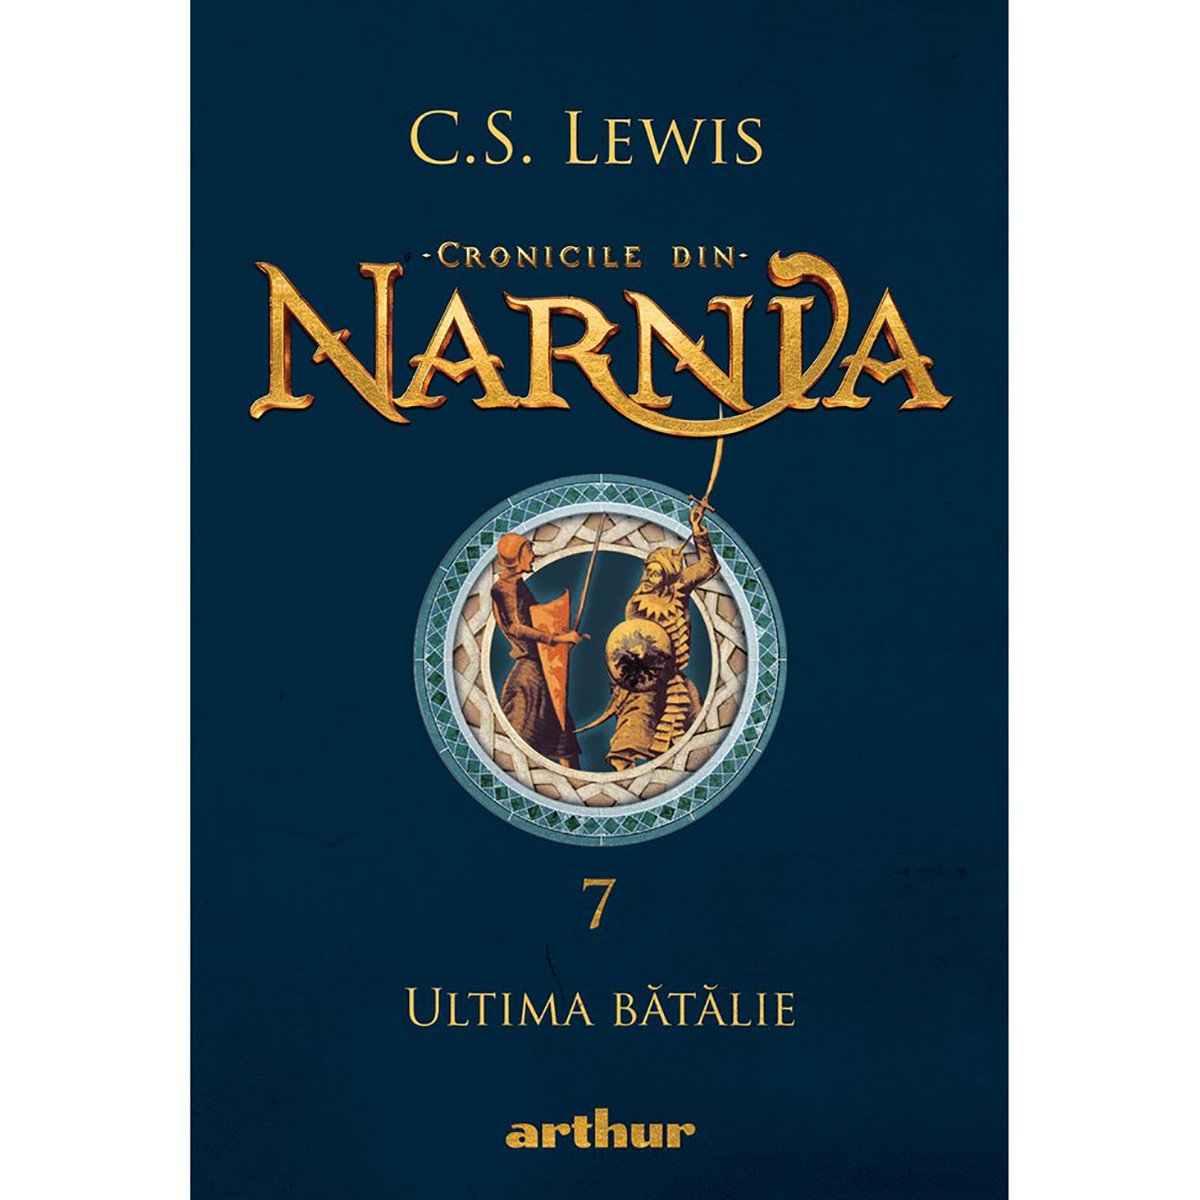 Cronicile din Narnia 7, Ultima batalie, C.S. Lewis Art imagine 2022 protejamcopilaria.ro